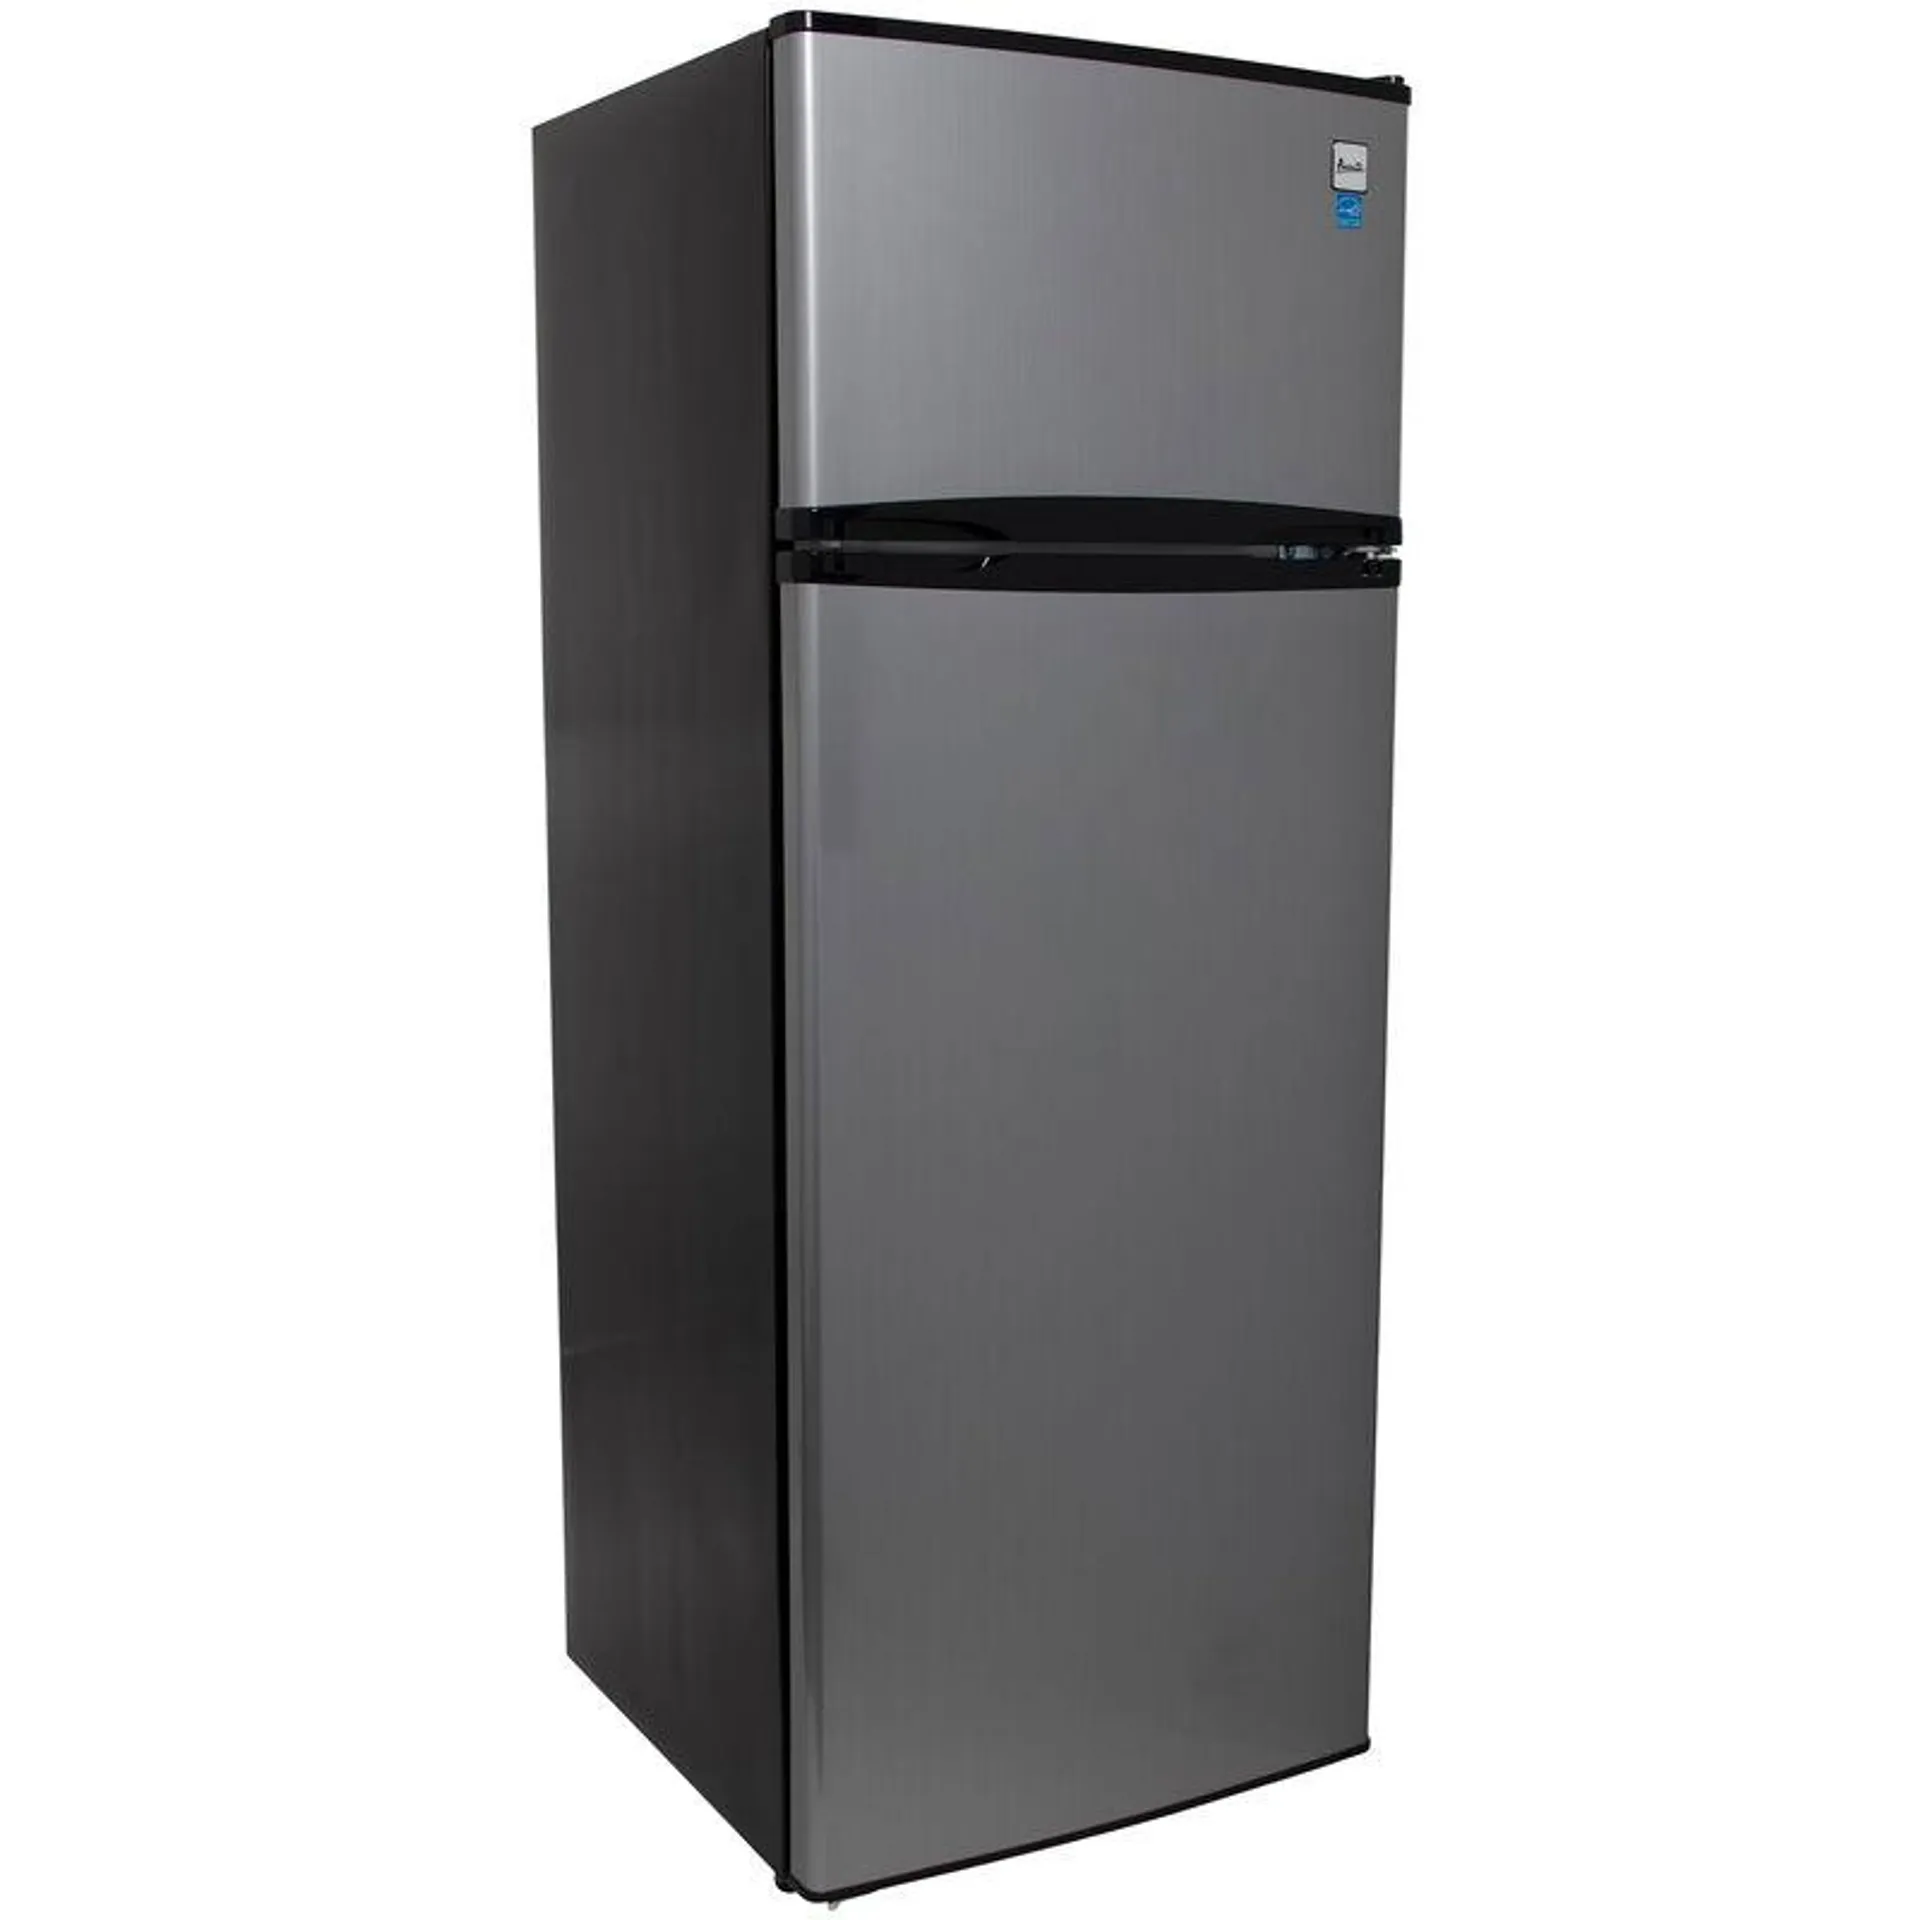 Avanti 22 in. 7.3 cu. ft. Top Freezer Refrigerator - Stainless Steel